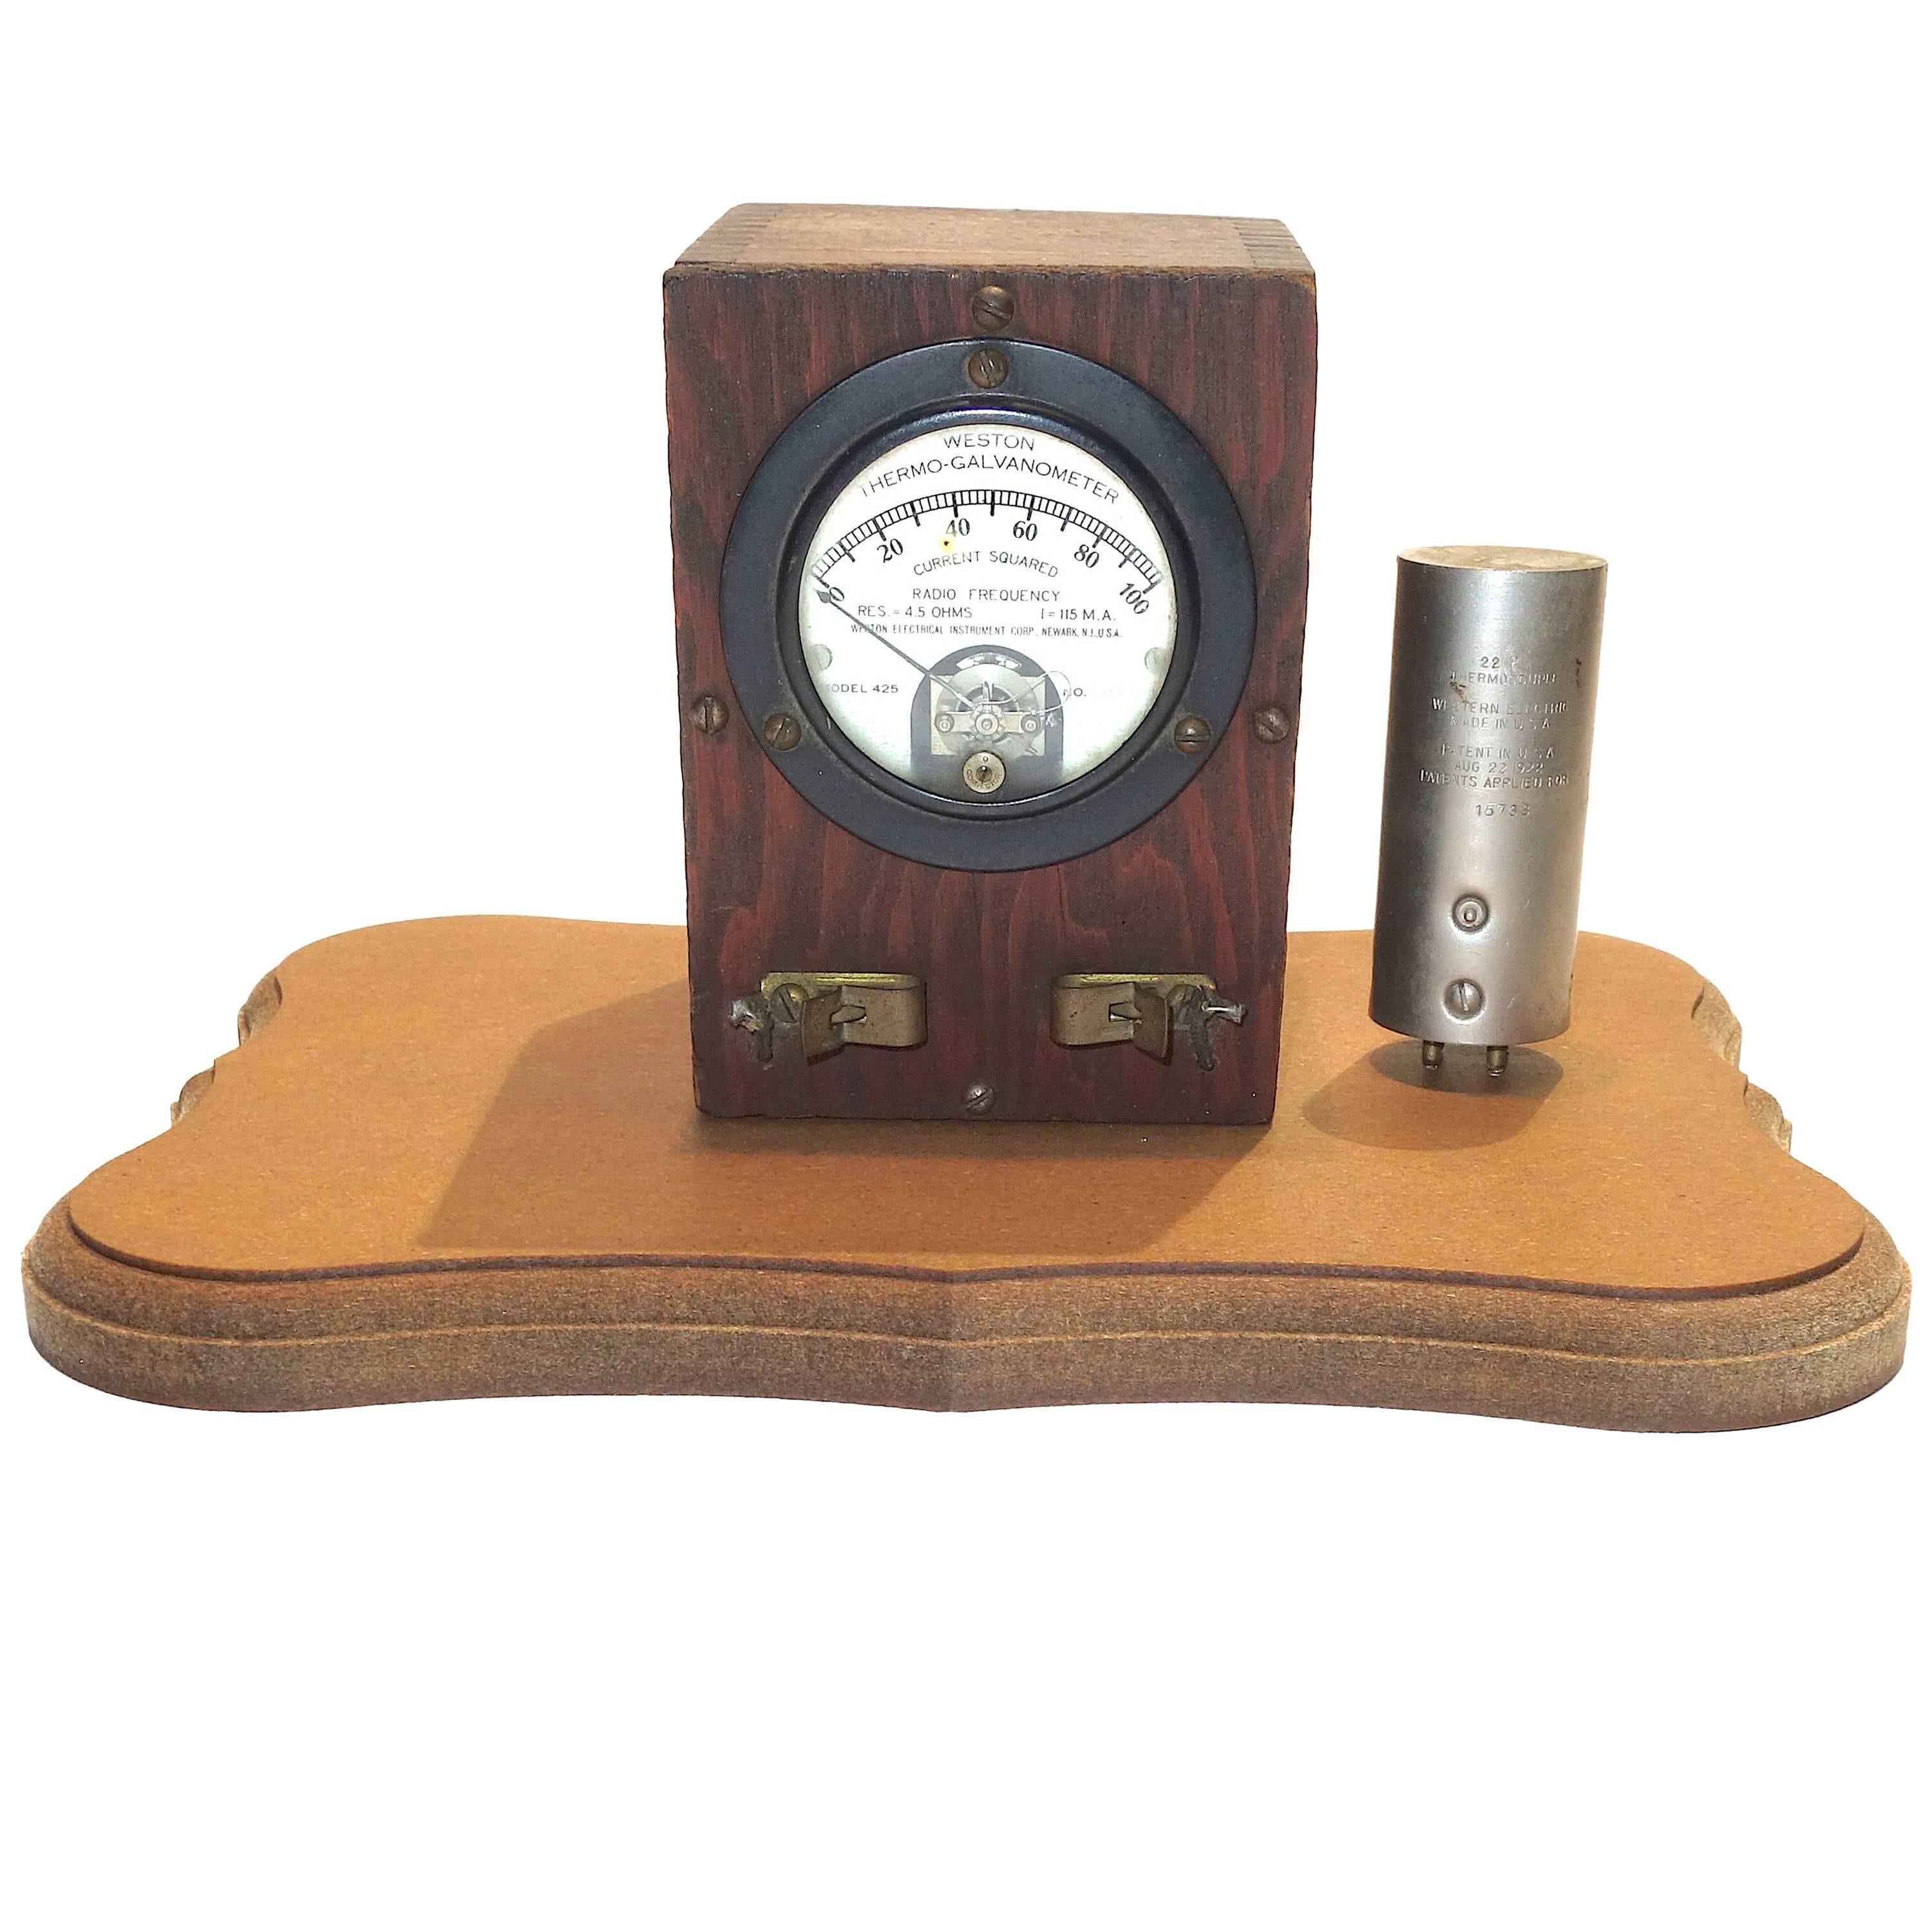 Weston Thermo Galvanometer Sculpture Circa 1922 W/ Electric Thermocouple ON SALE For Sale